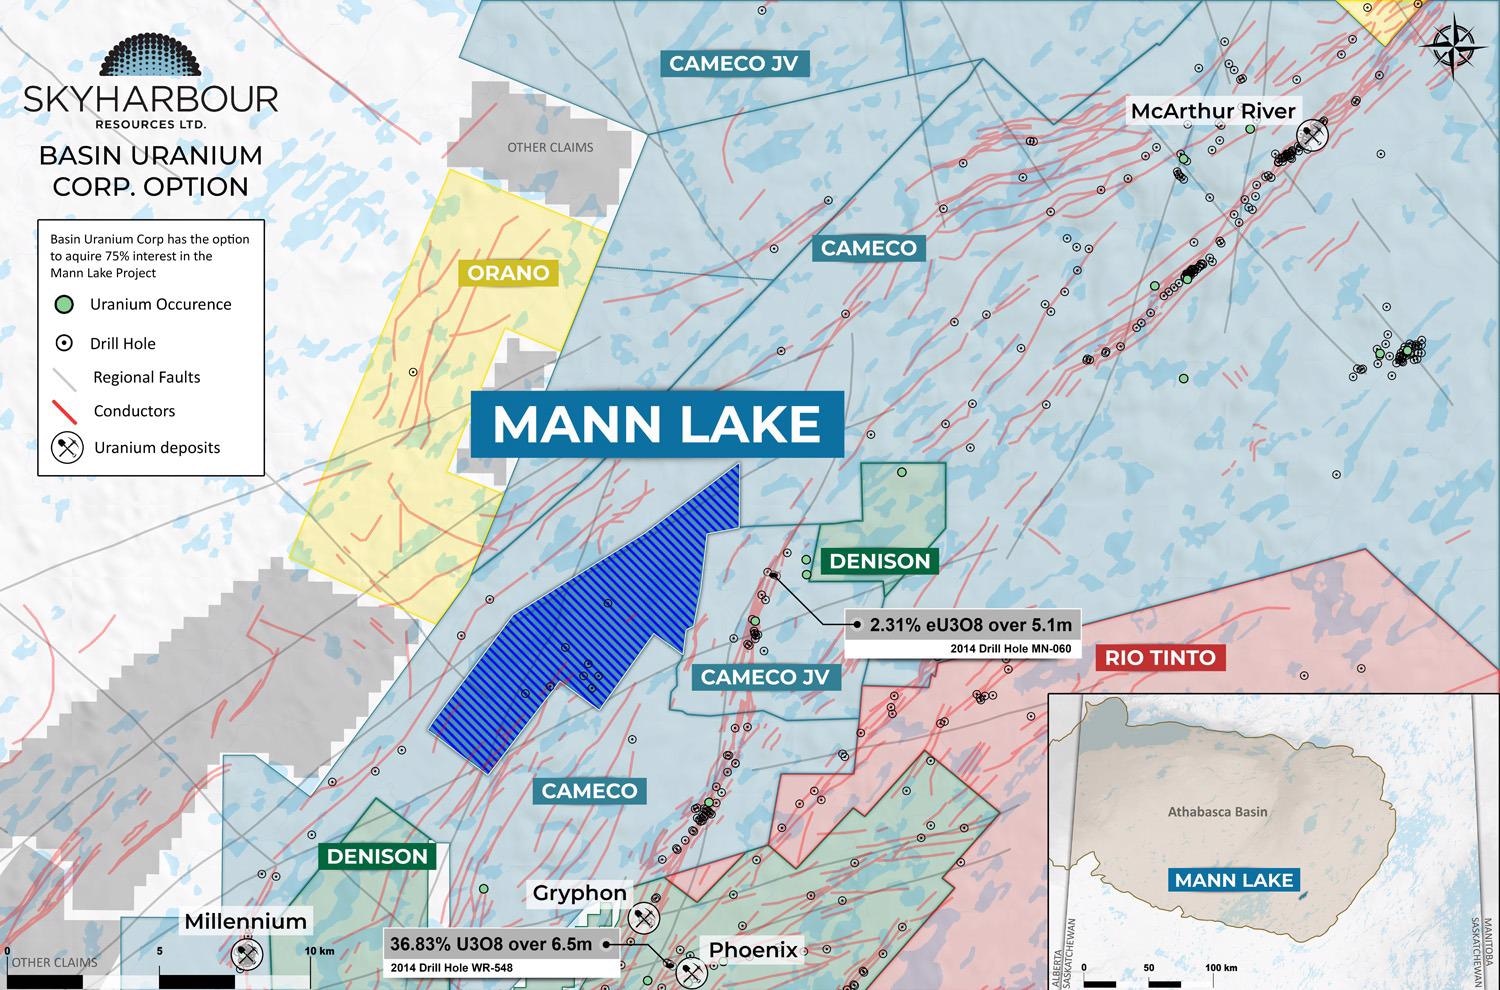 Report on Mann Lake Uranium Project from Skyharbour’s Partner Company Basin Uranium.